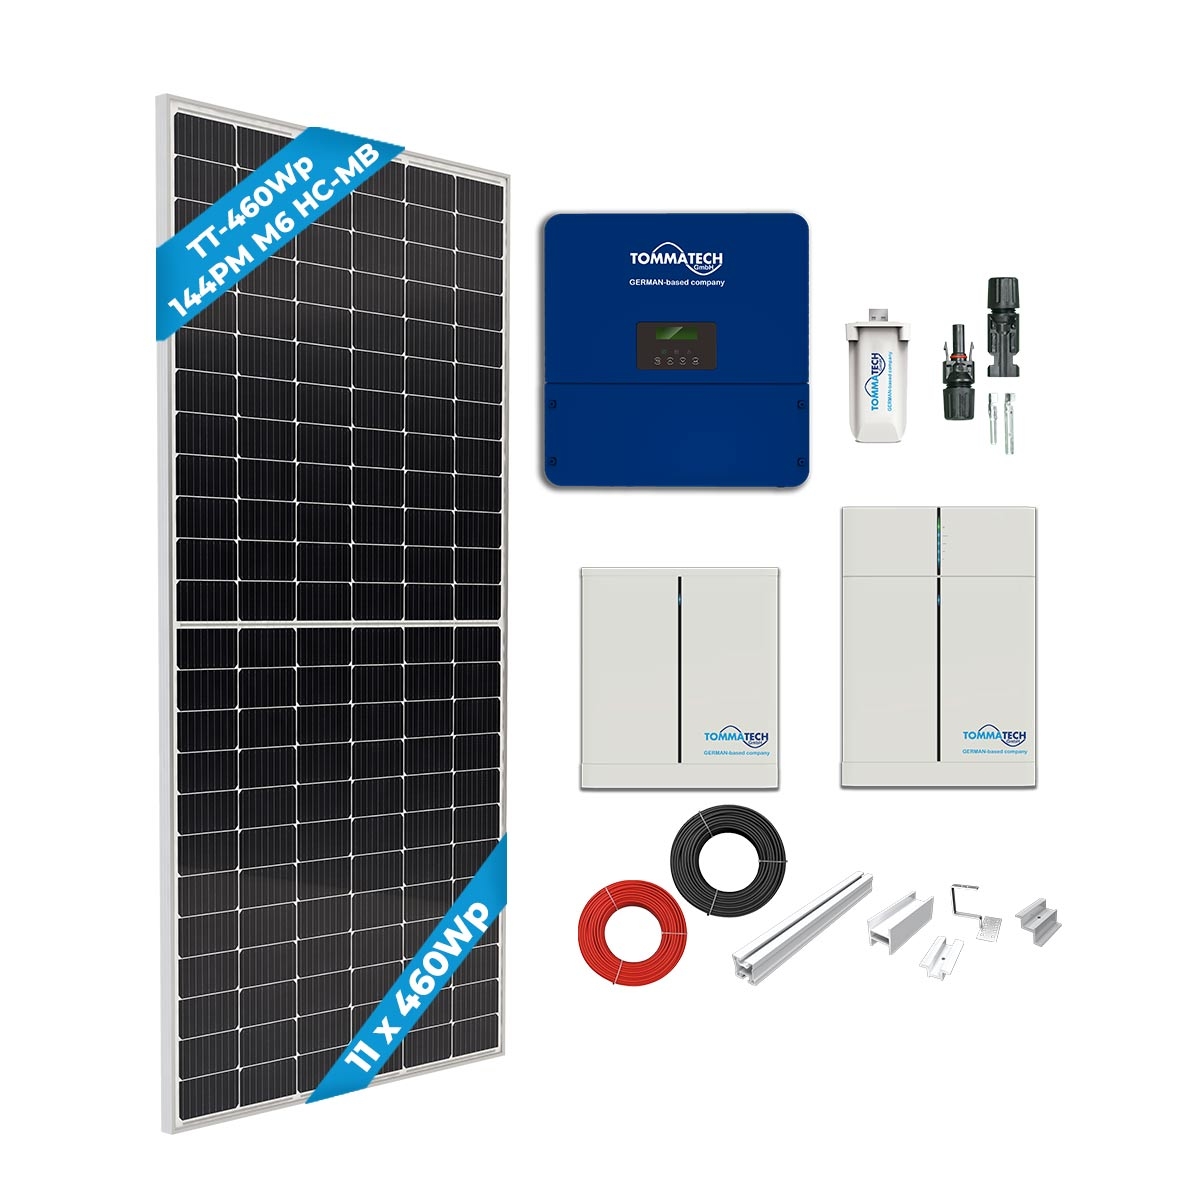 TommaTech 5kWe Tile Roof Single Phase Hybrid Solar Package